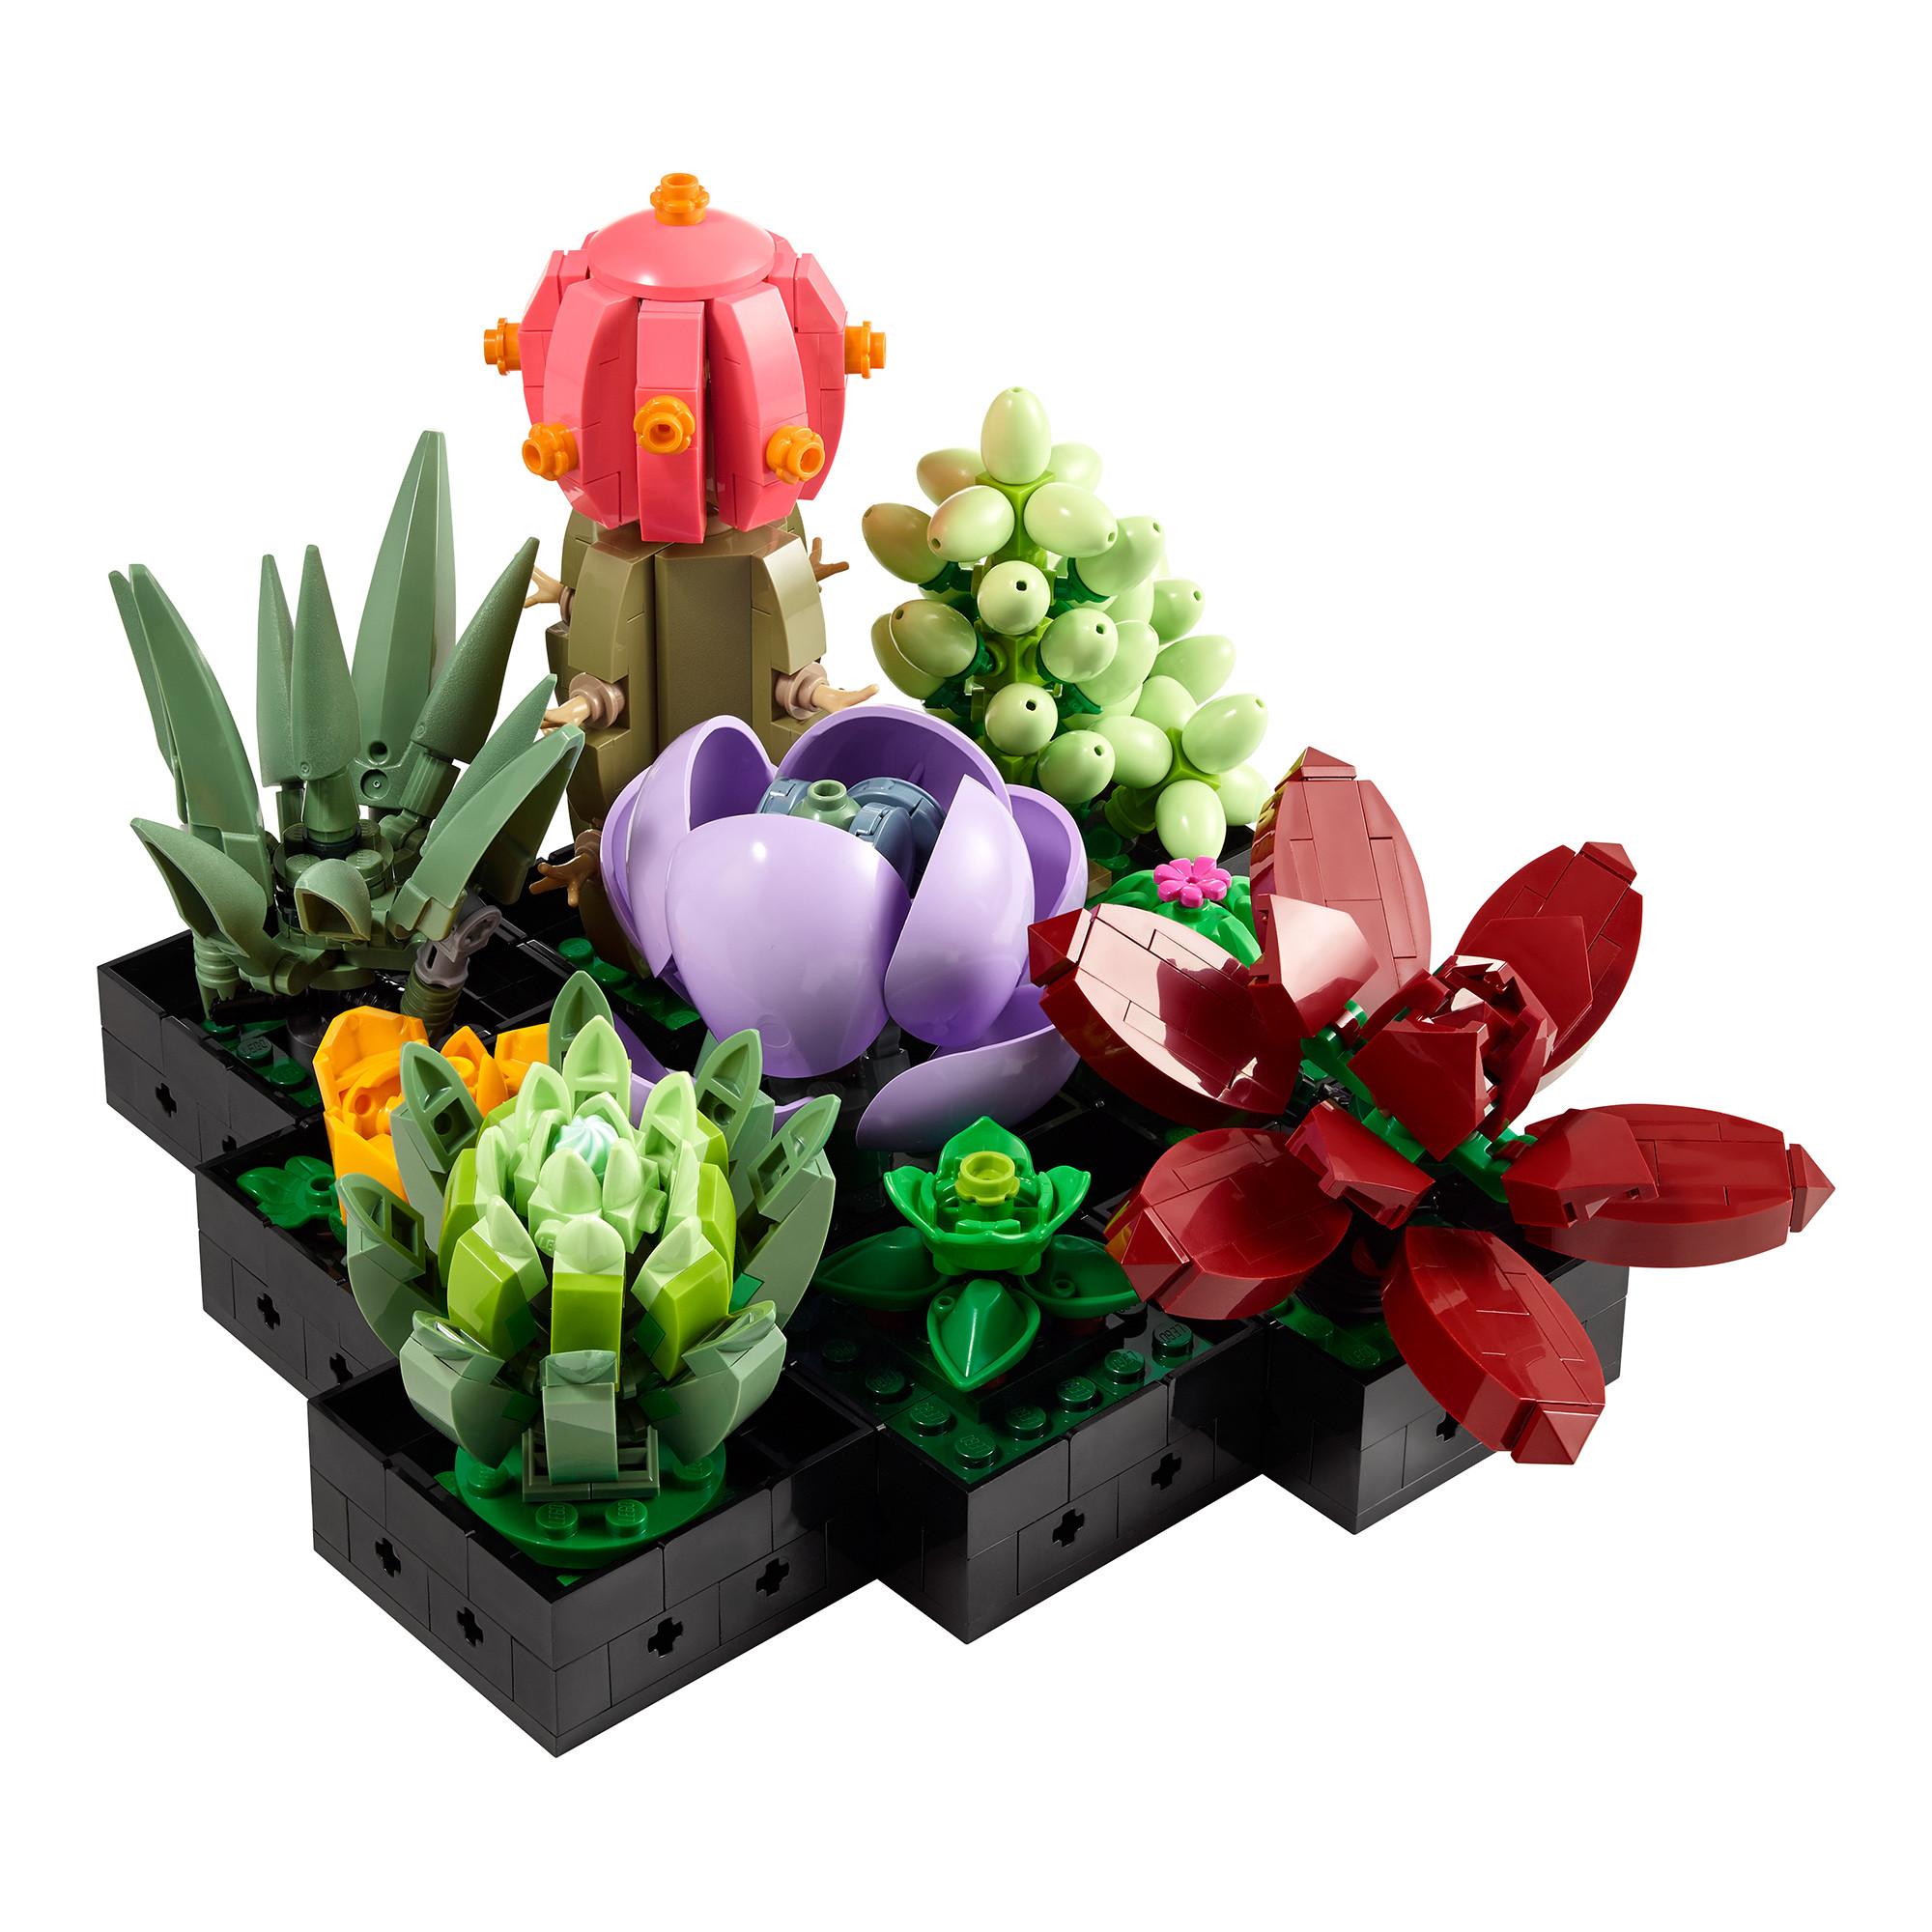 LEGO®  10309 Les succulentes 